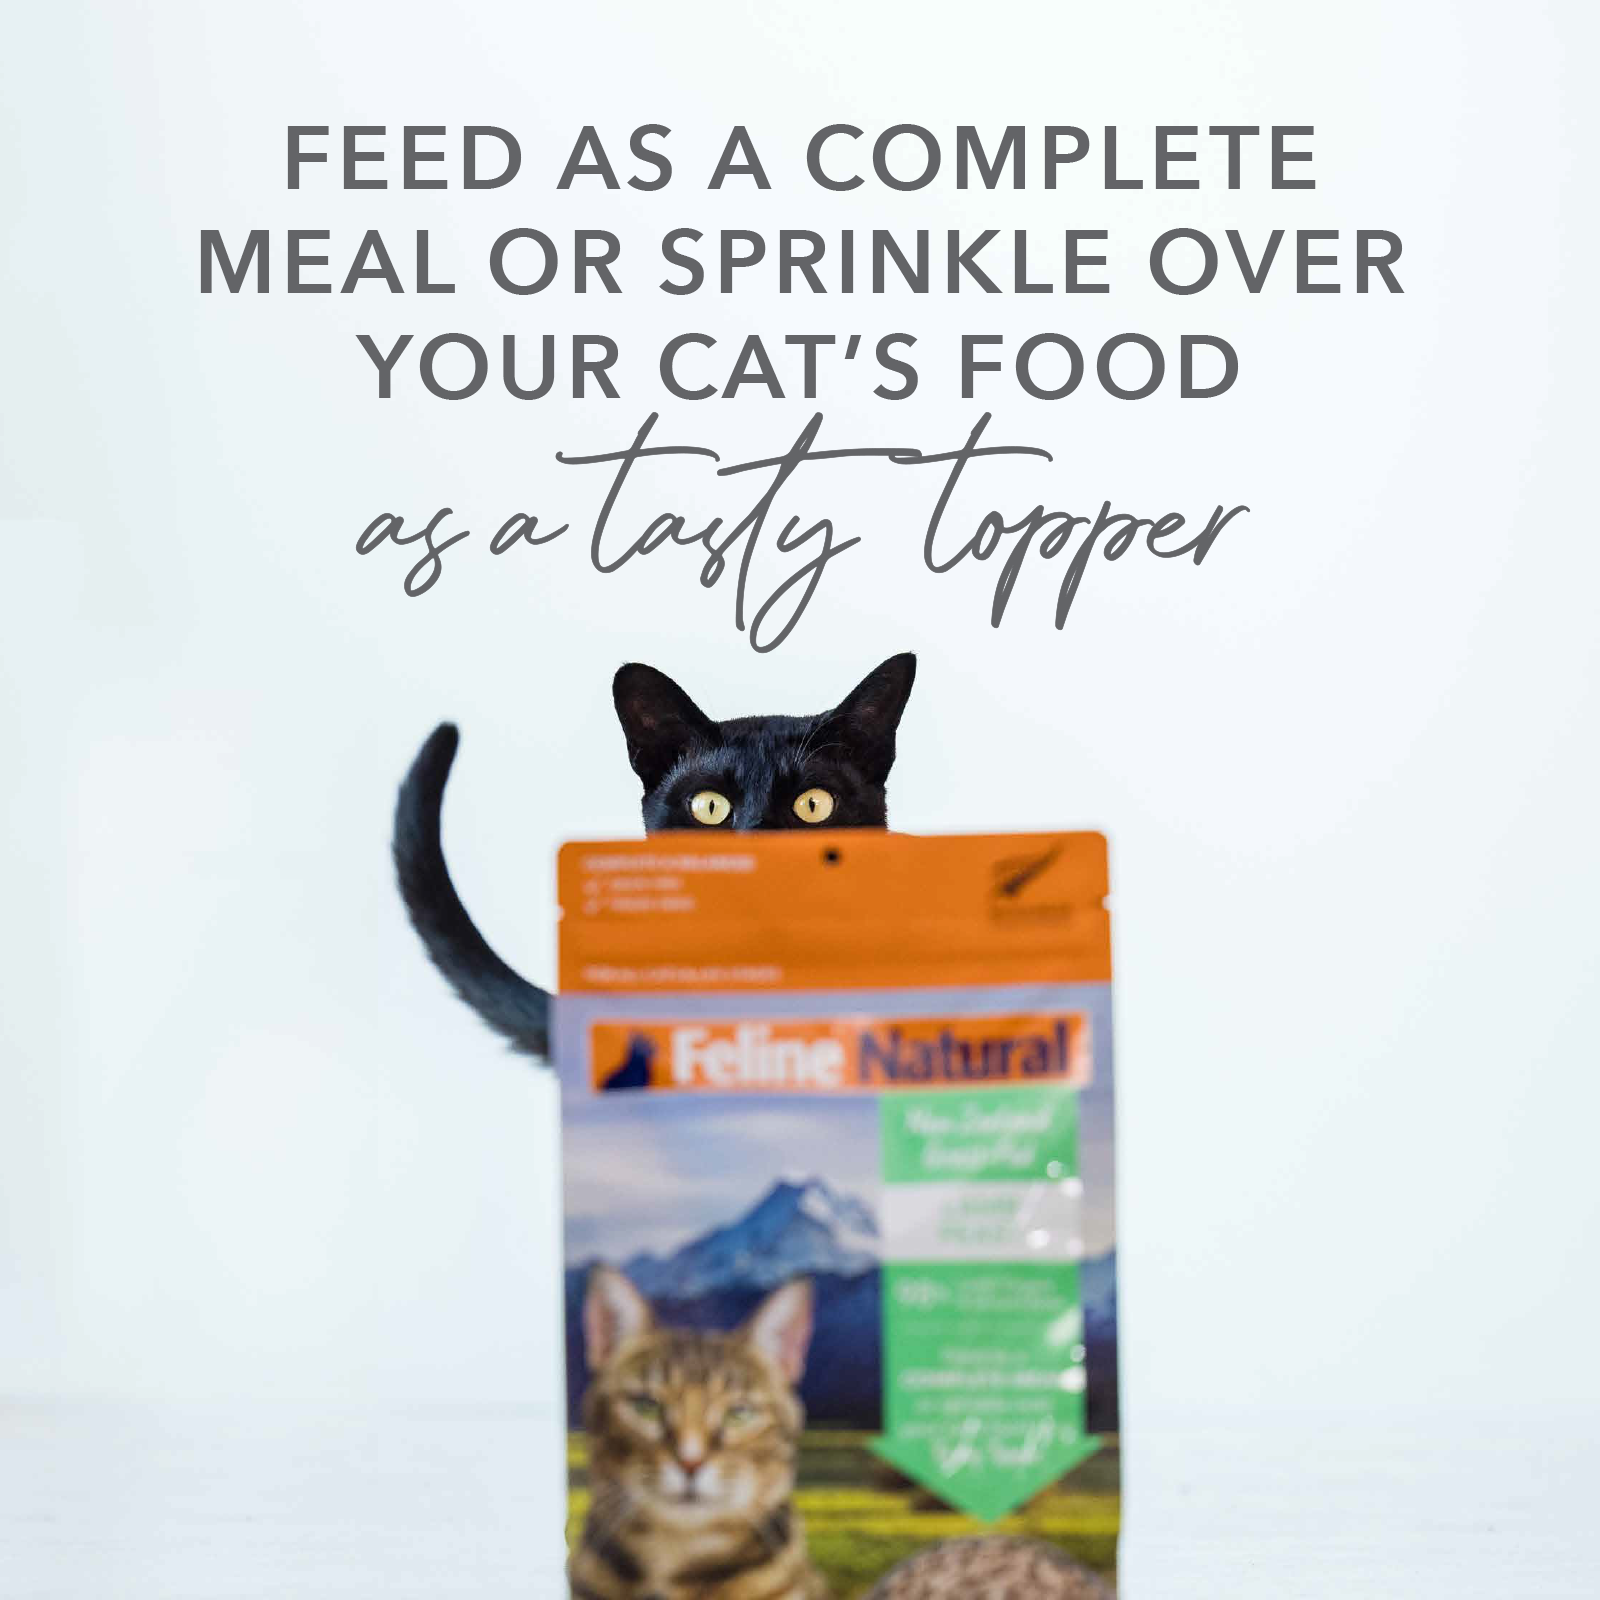 Feline Natural Grain Free Freeze Dried Cat Food Lamb & Salmon